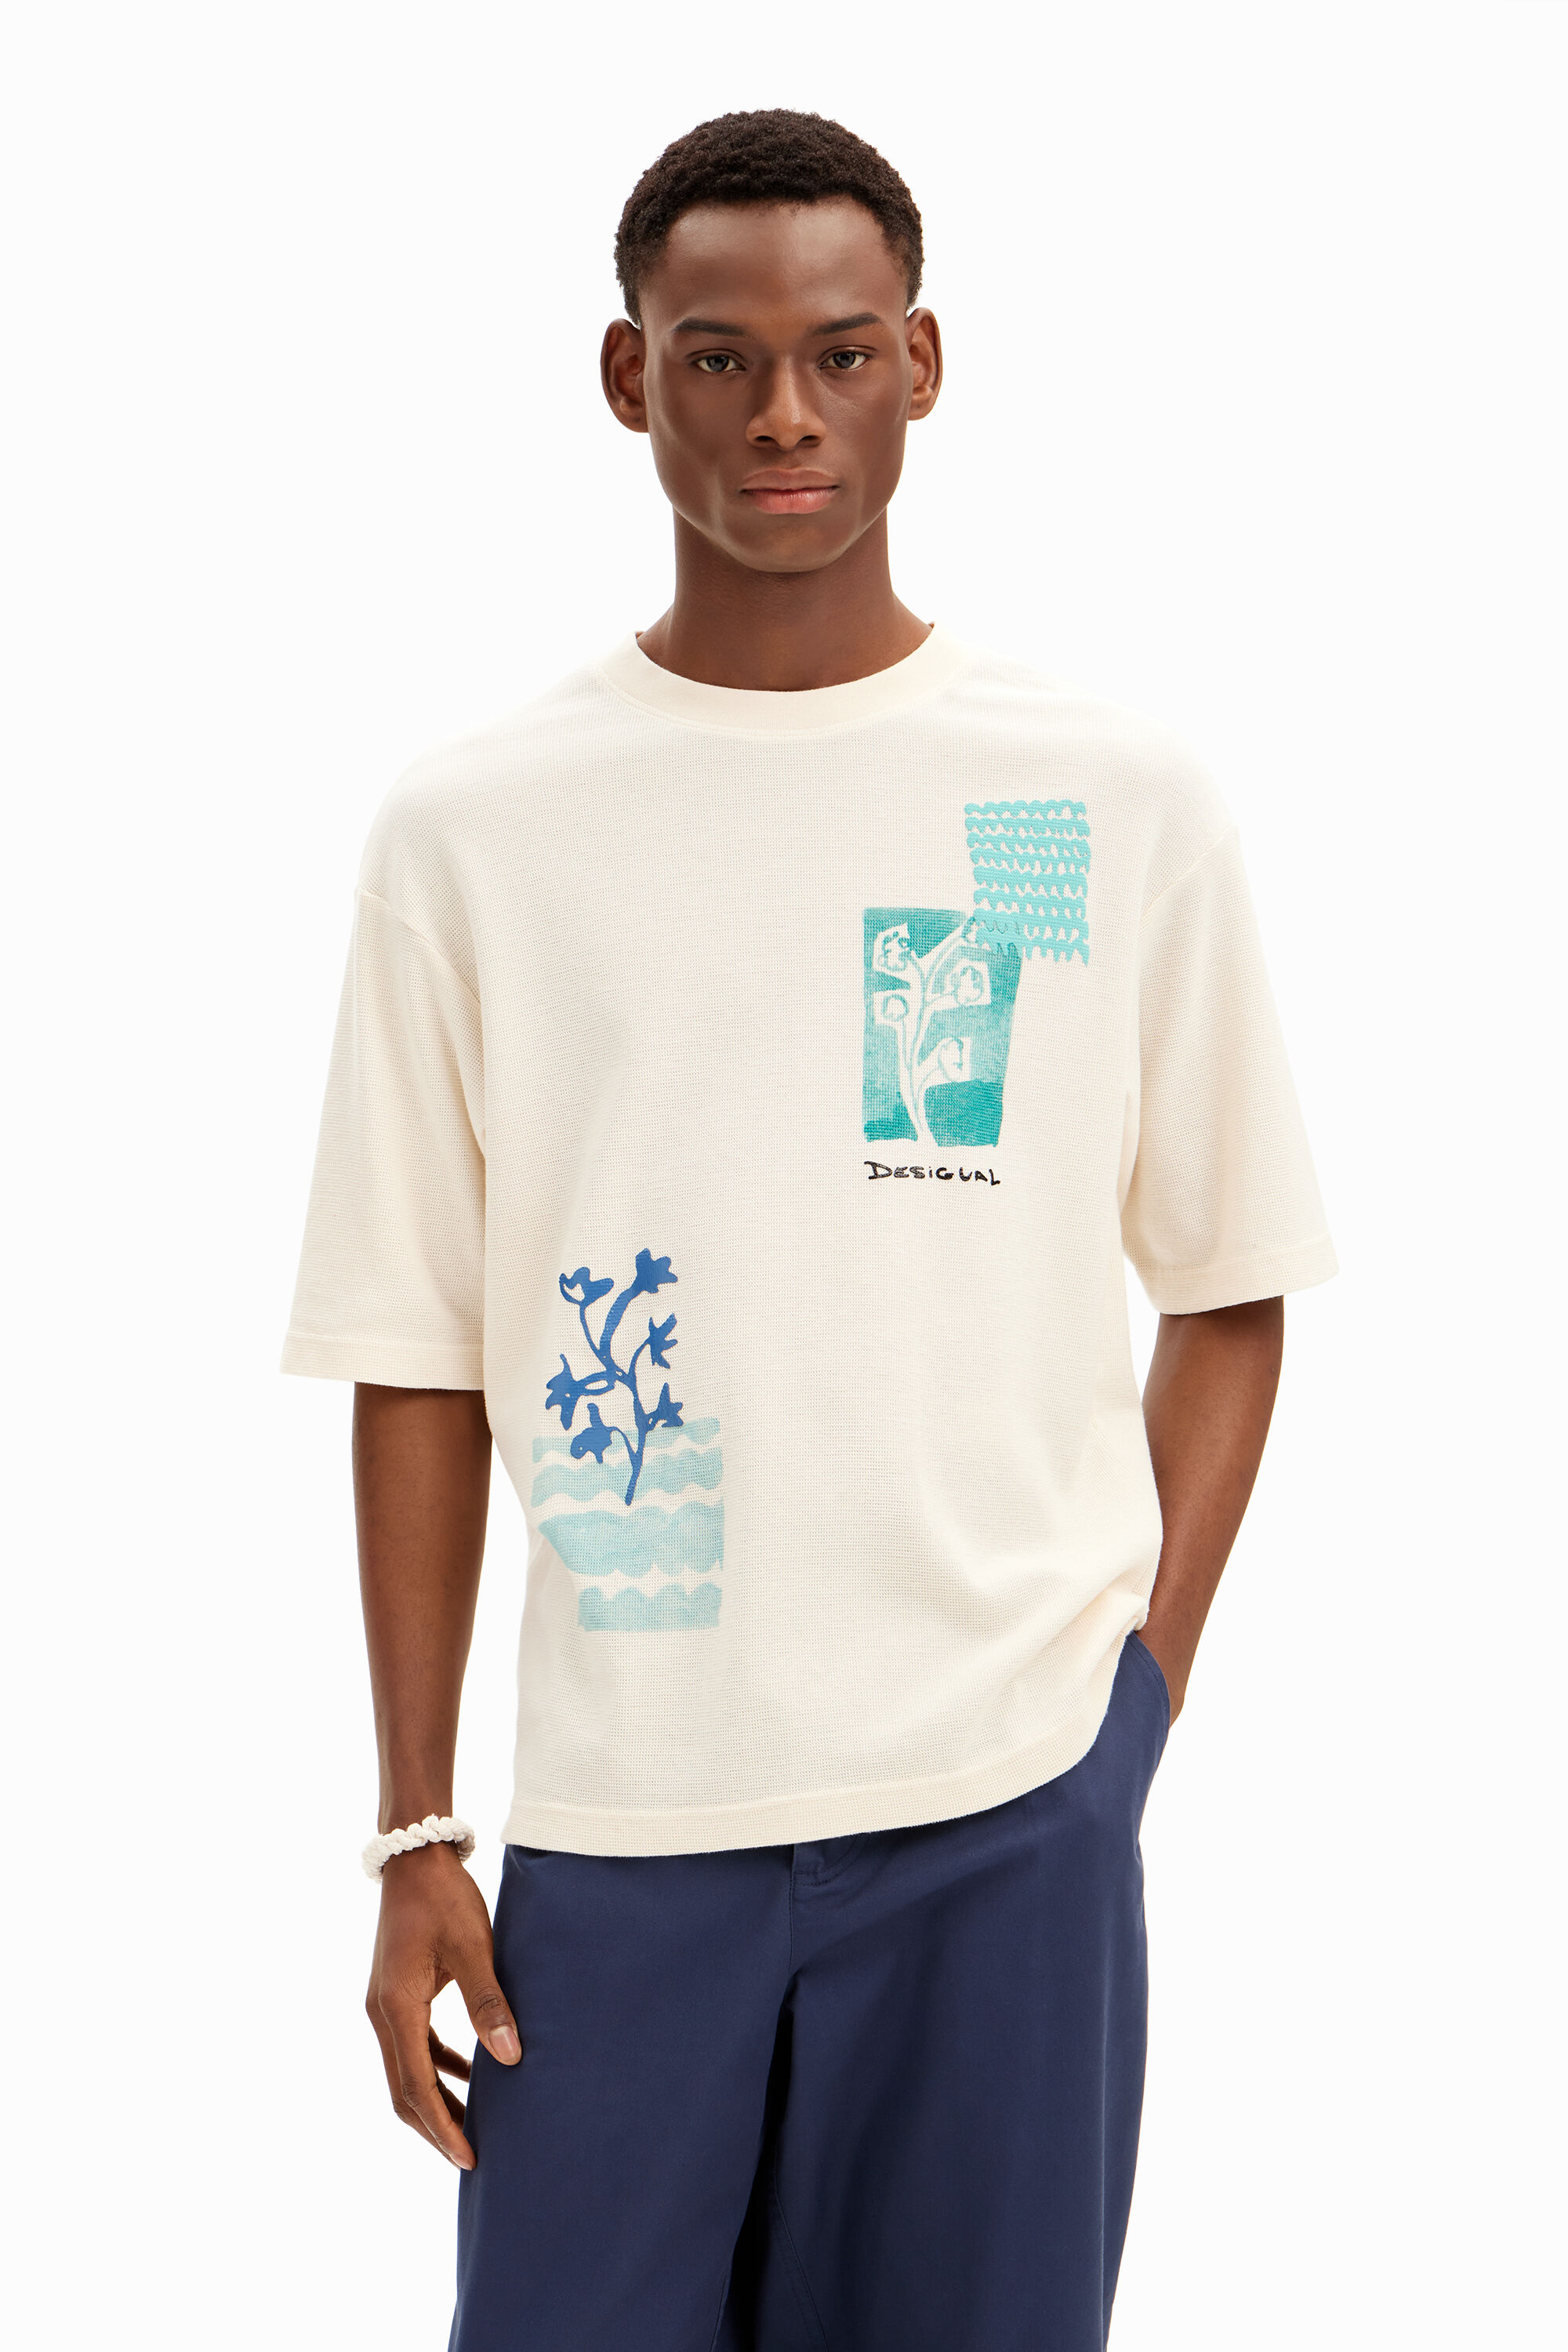 Desigual T-shirt met korte mouwen in aquarelstijl. - WHITE